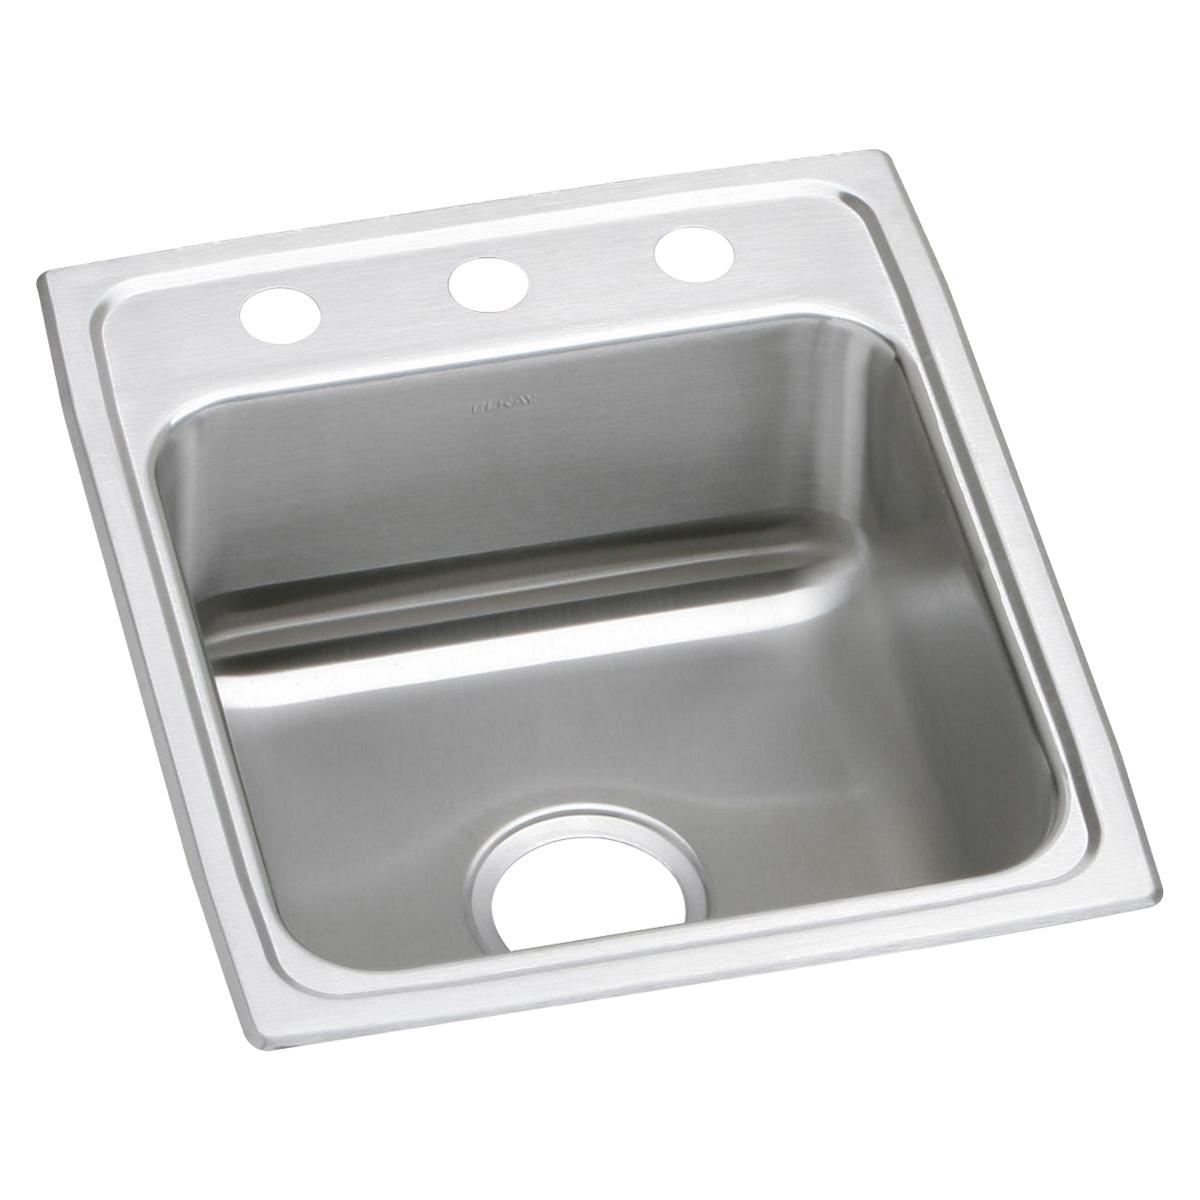 Elkay Lustertone Classic 17" x 20" x 5" MR2-Hole Single Bowl Drop-in ADA Sink